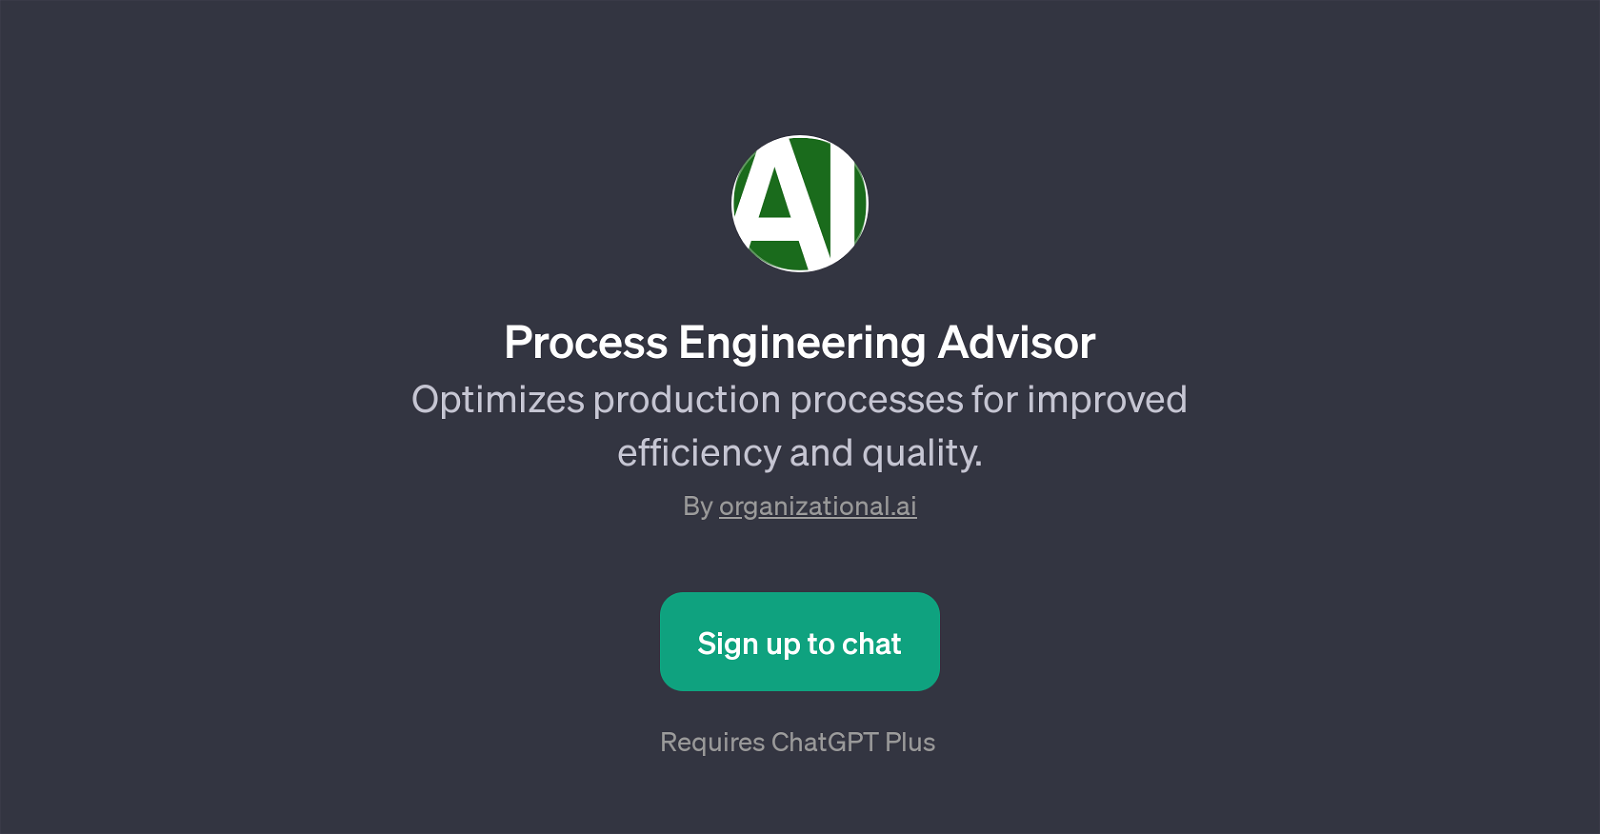 Process Engineering Advisor website